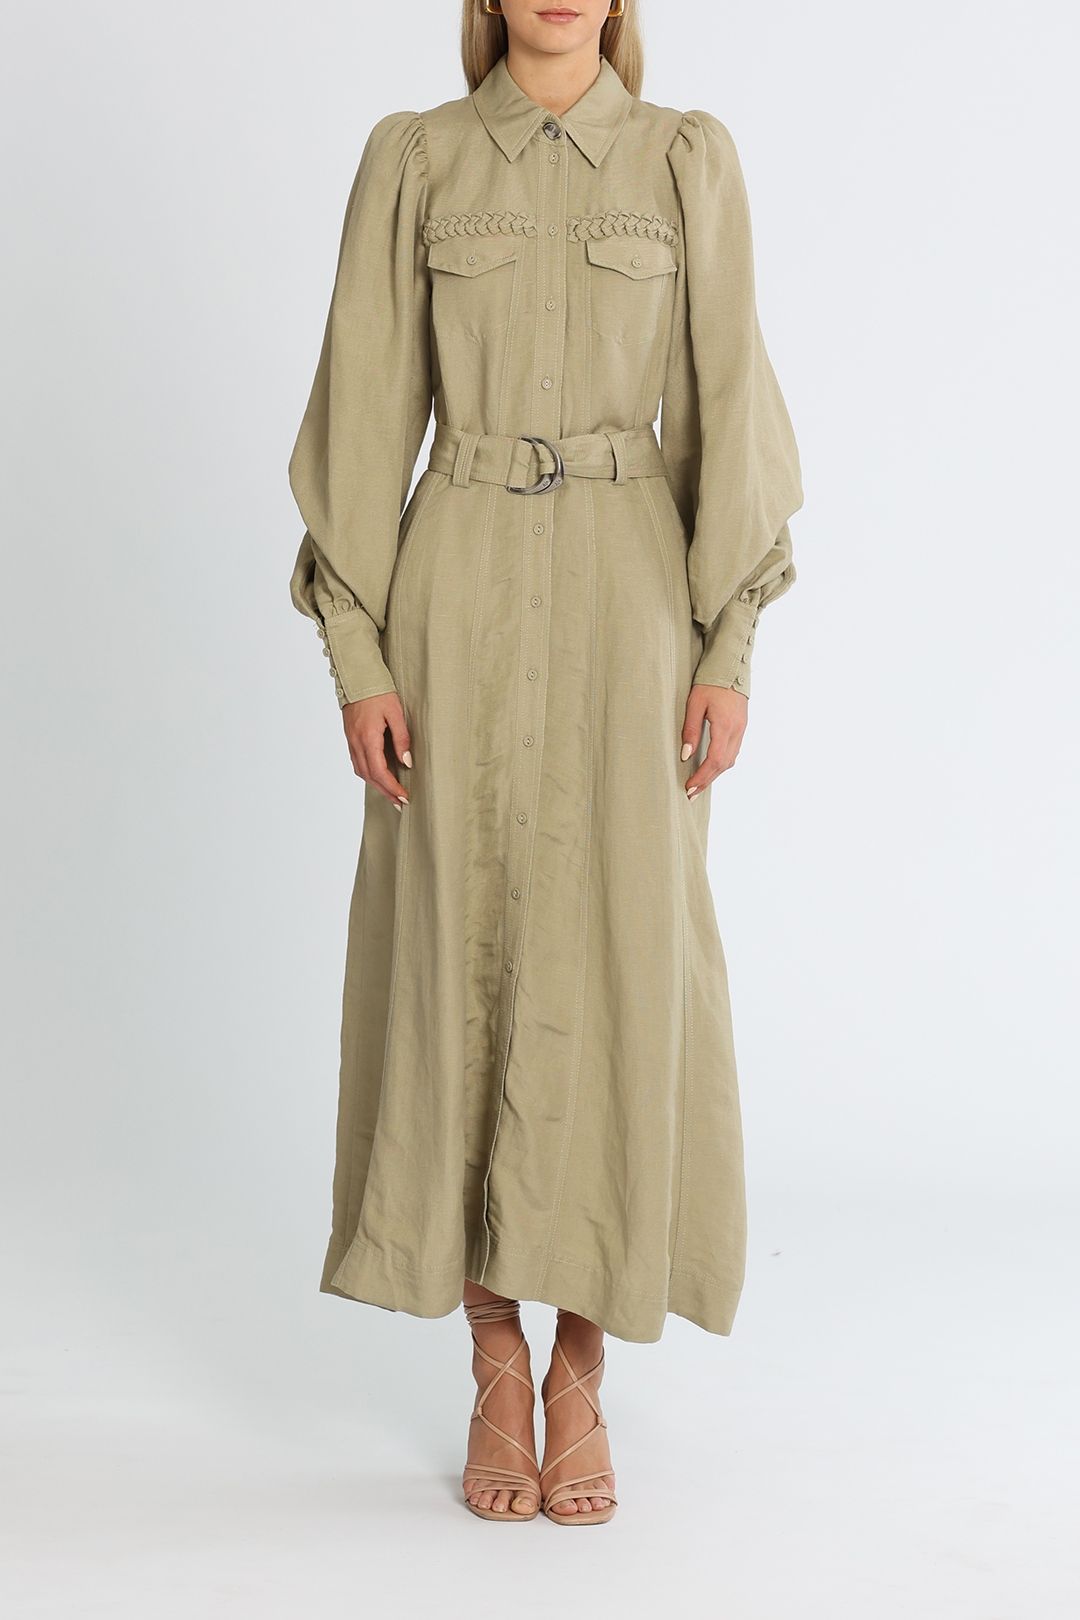 Hire Ephemera Braided Midi Dress in Concrete Grey | AJE | GlamCorner